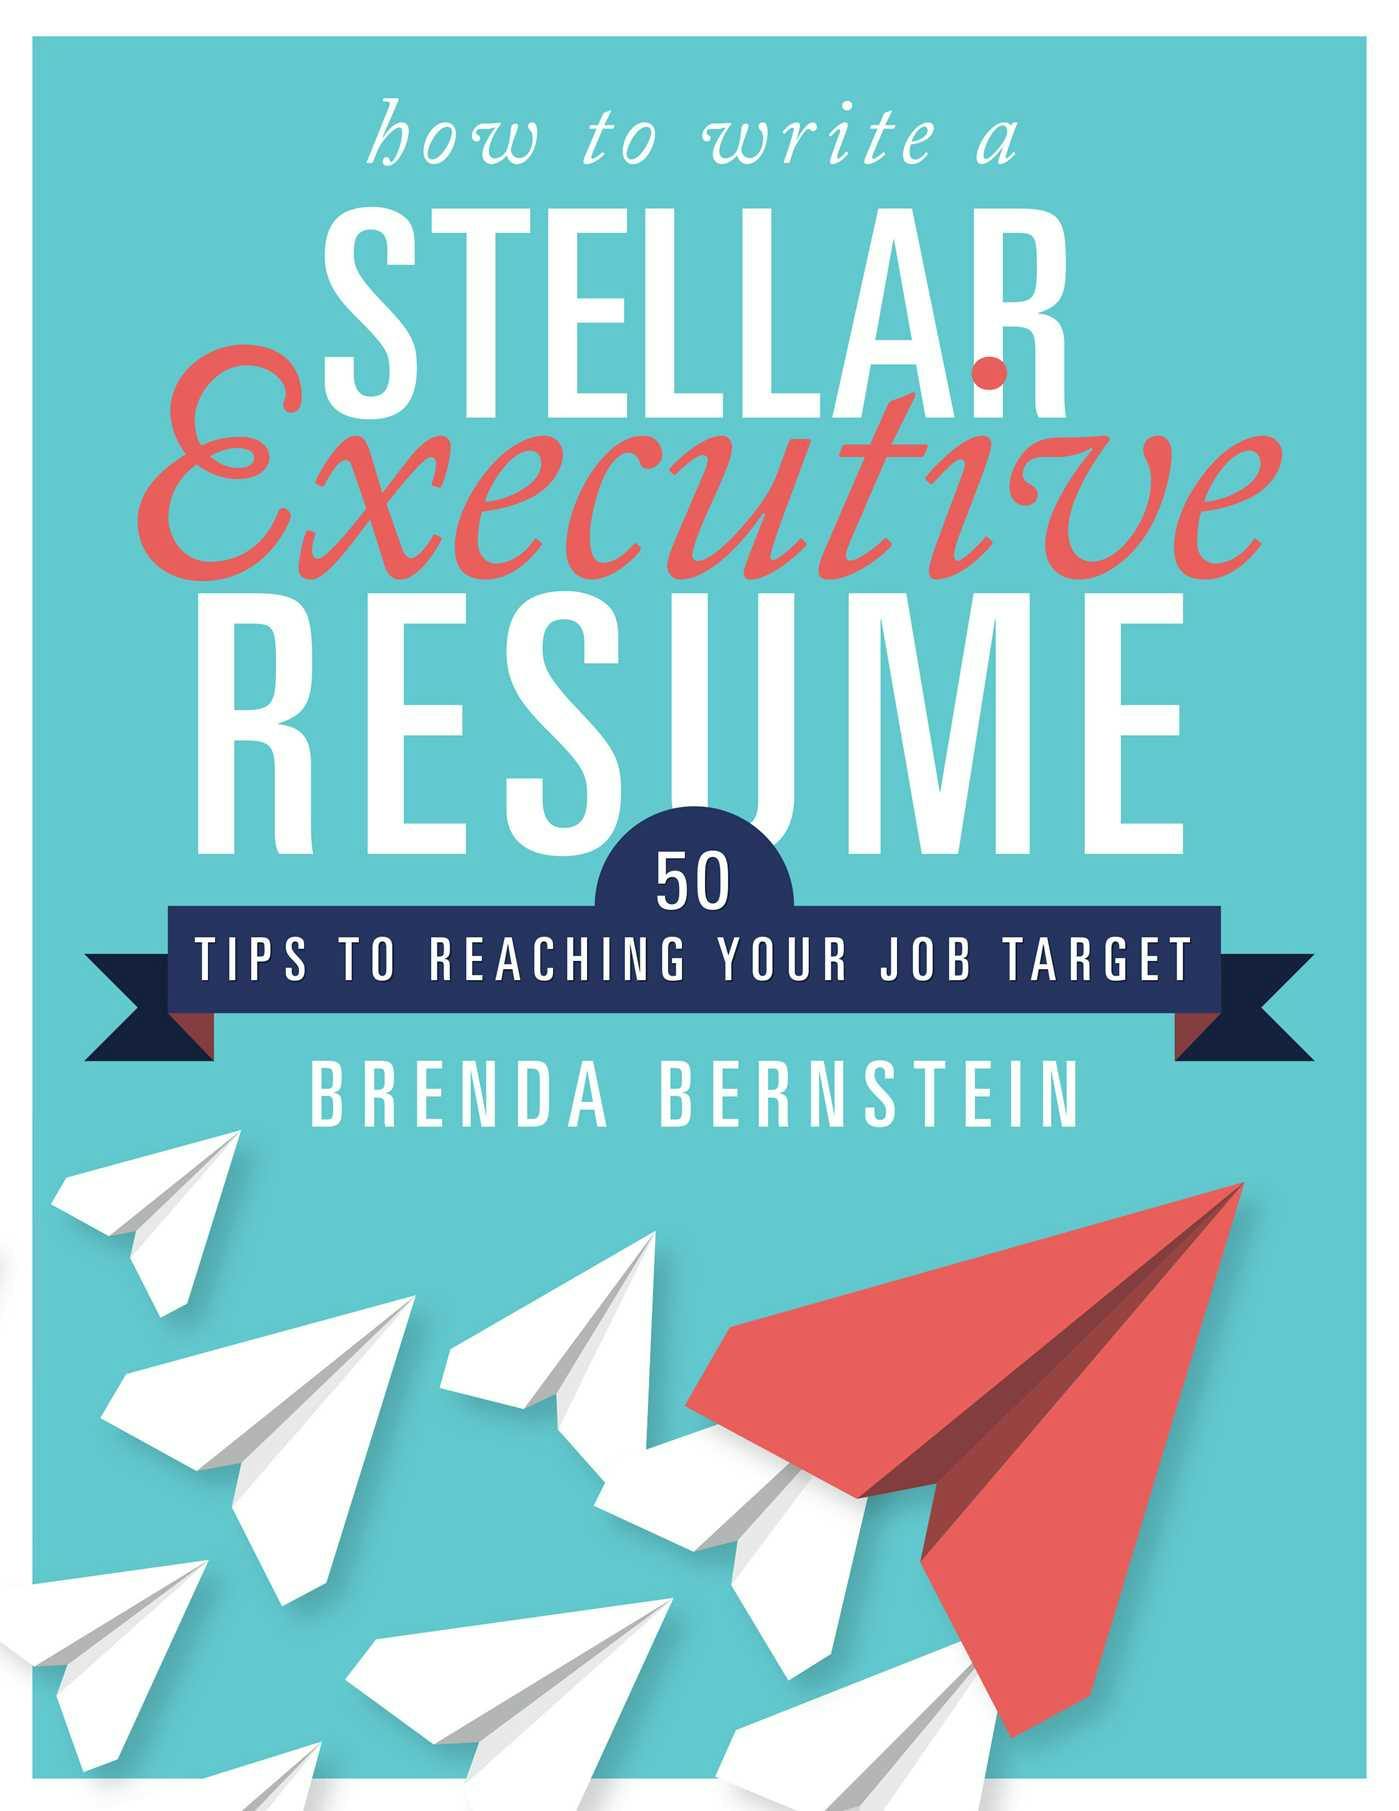 How to Write a Stellar Executive Resume: 50 Tips to Reaching Your Job Target - Brenda Bernstein